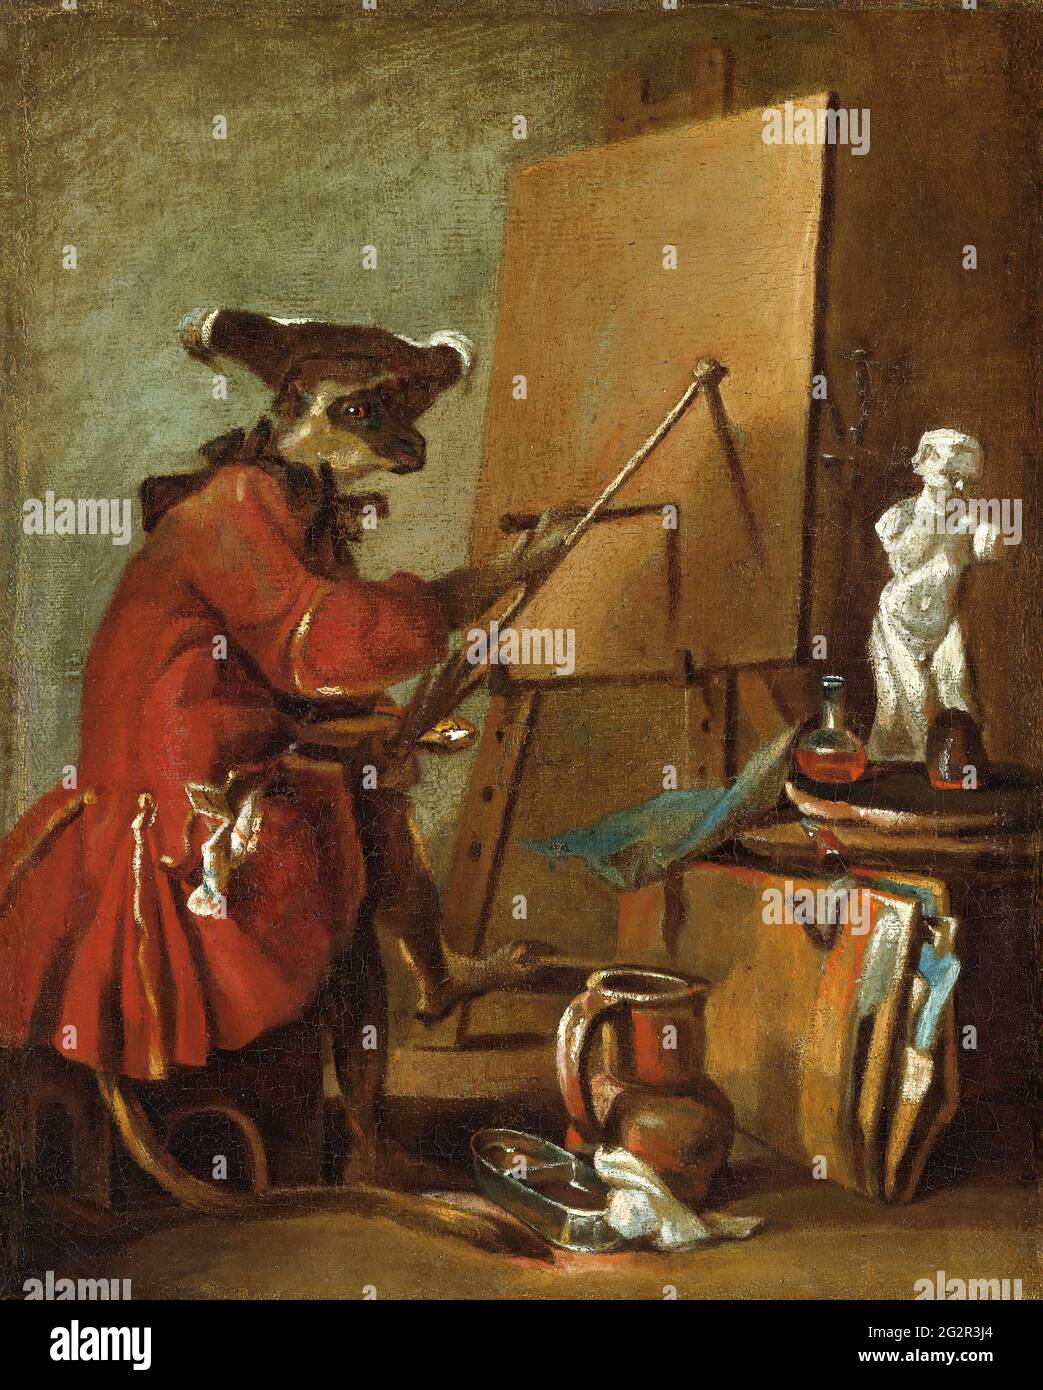 Jean Baptiste Simeon Chardin - Le Singe Peintre Stock Photo - Alamy